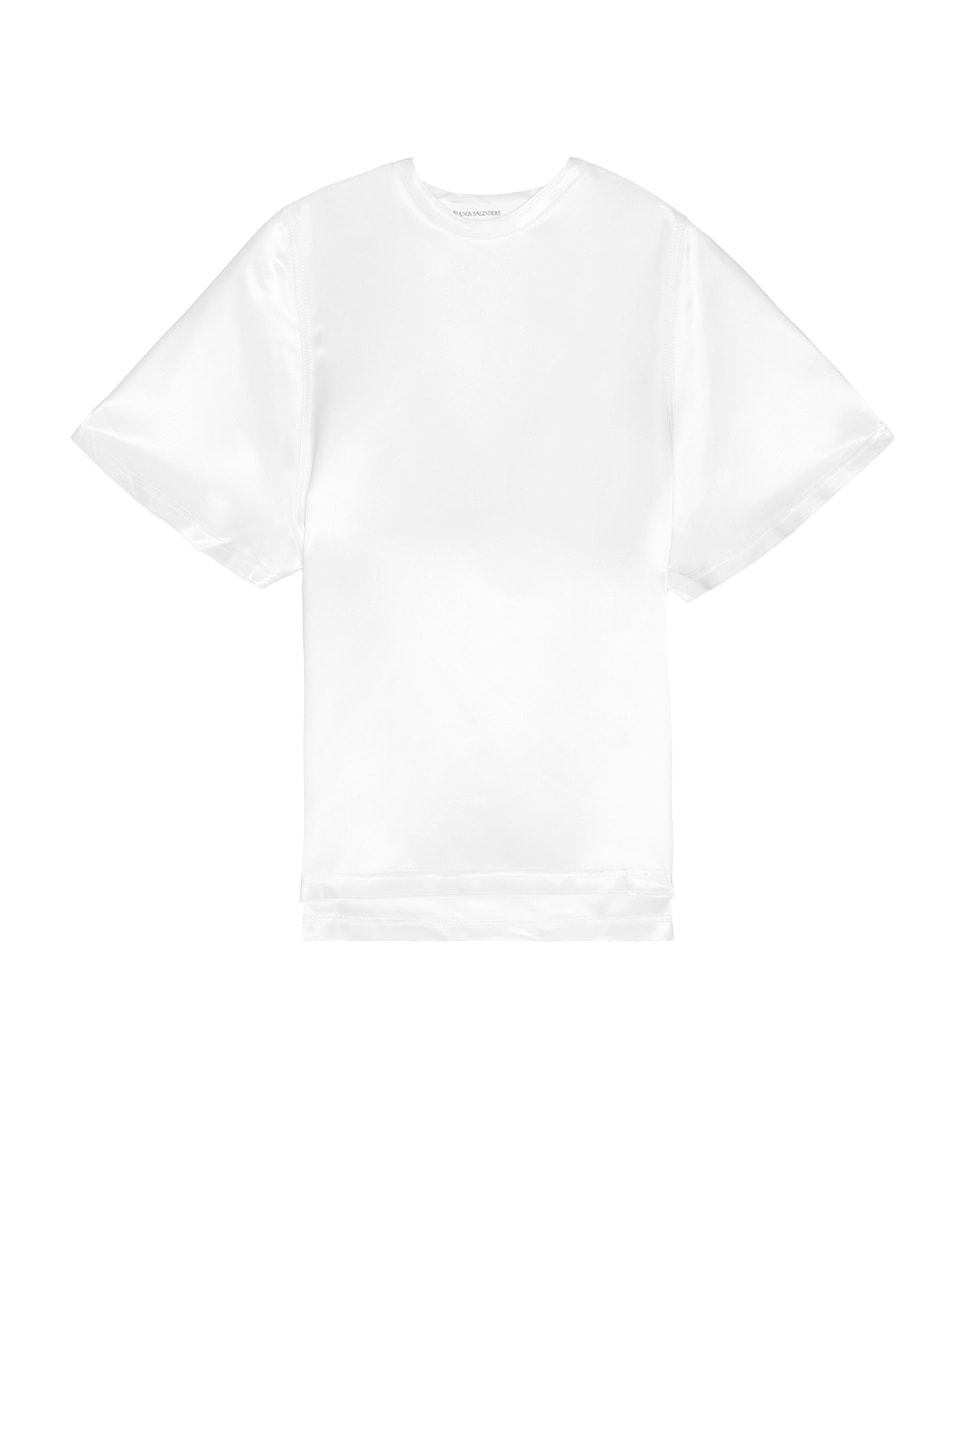 Image 1 of Bianca Saunders Mun Shirt in White